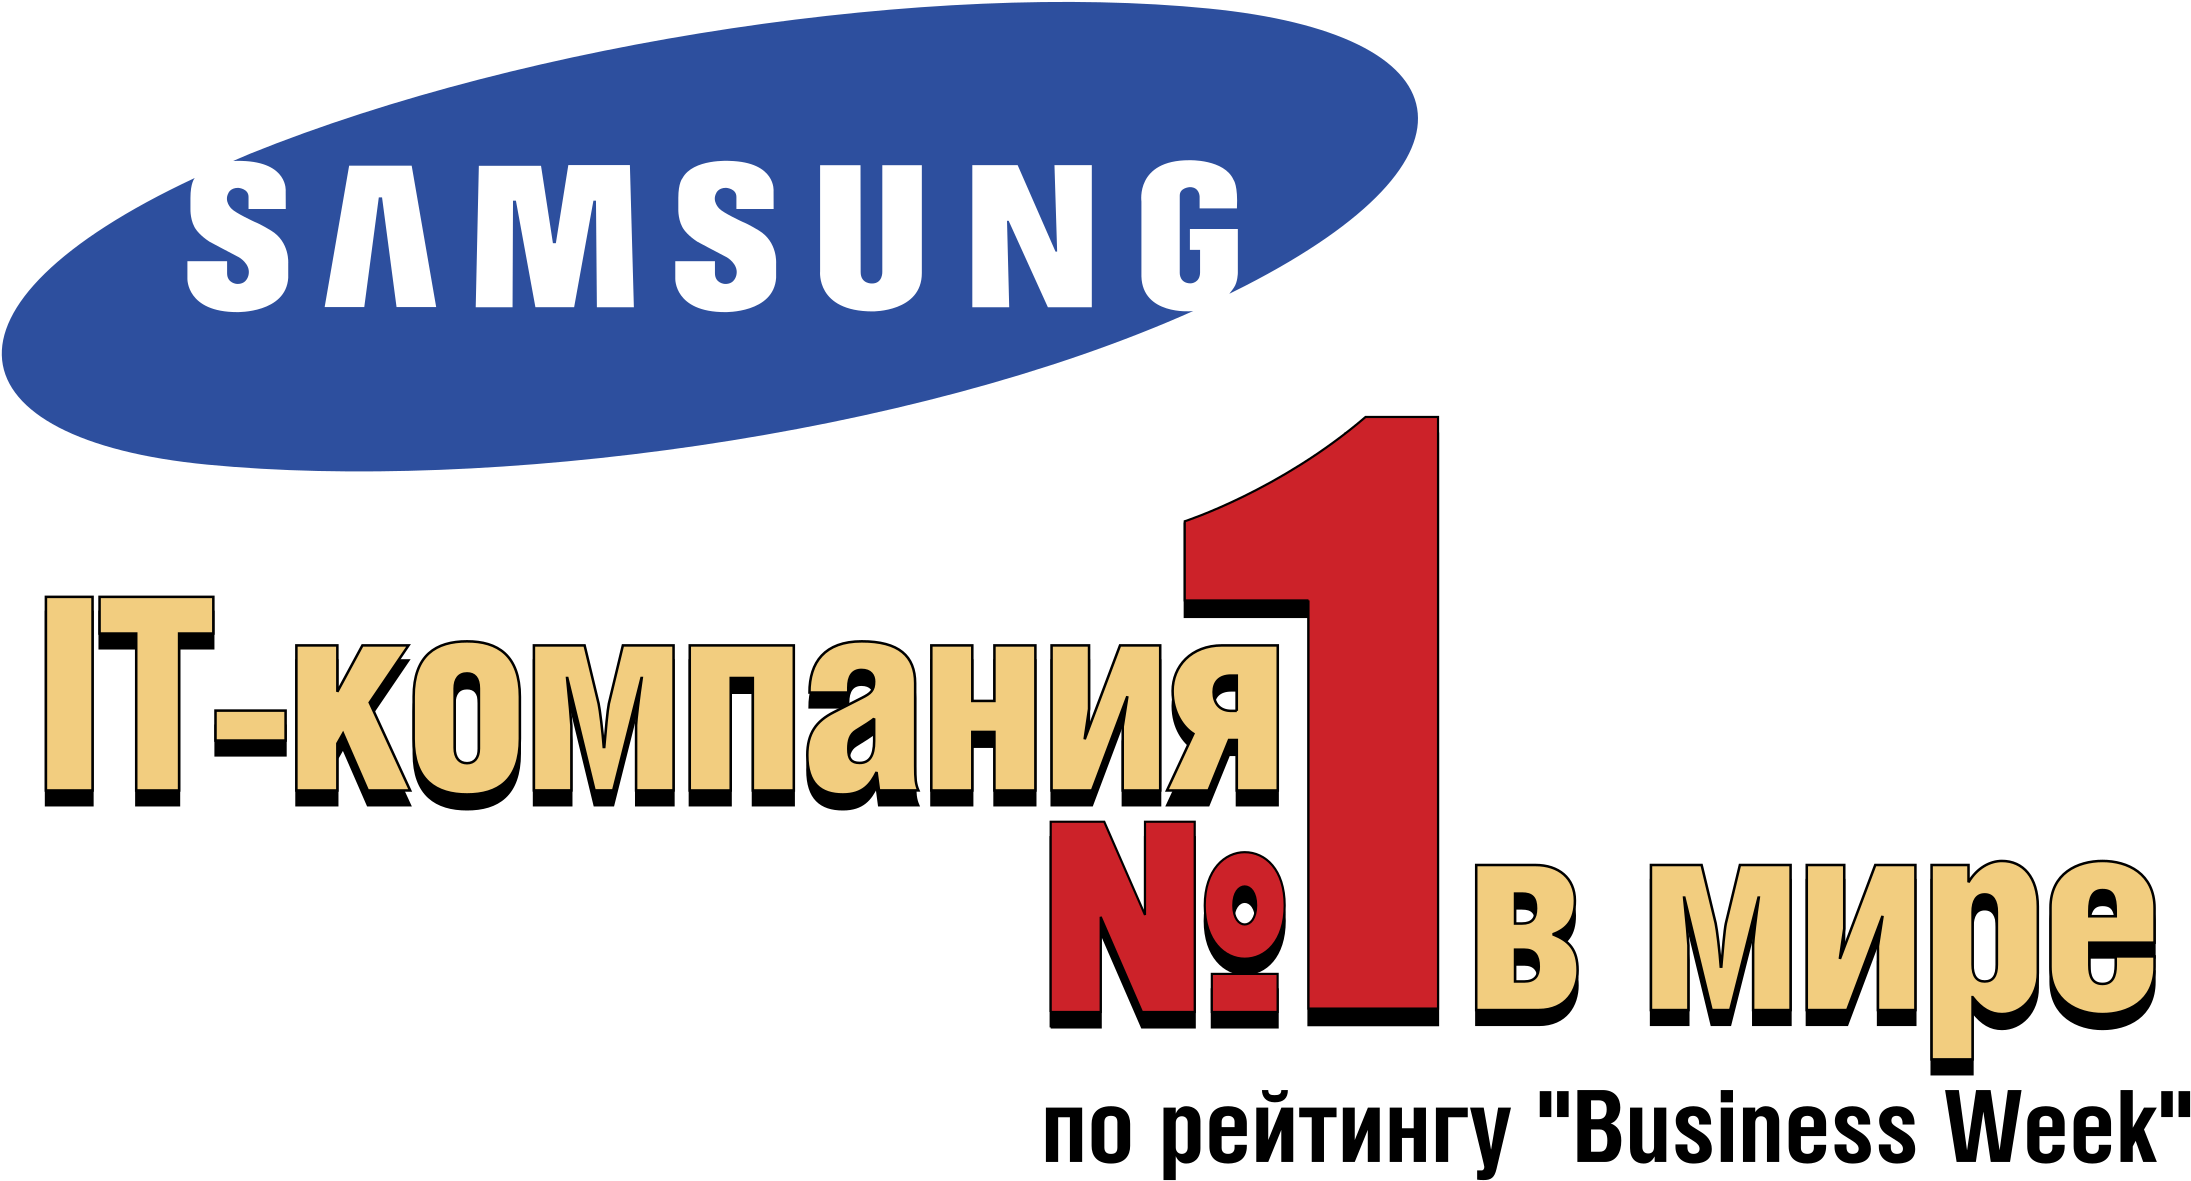 Samsung Logo Png Transparent - Graphic Design (2400x2400), Png Download